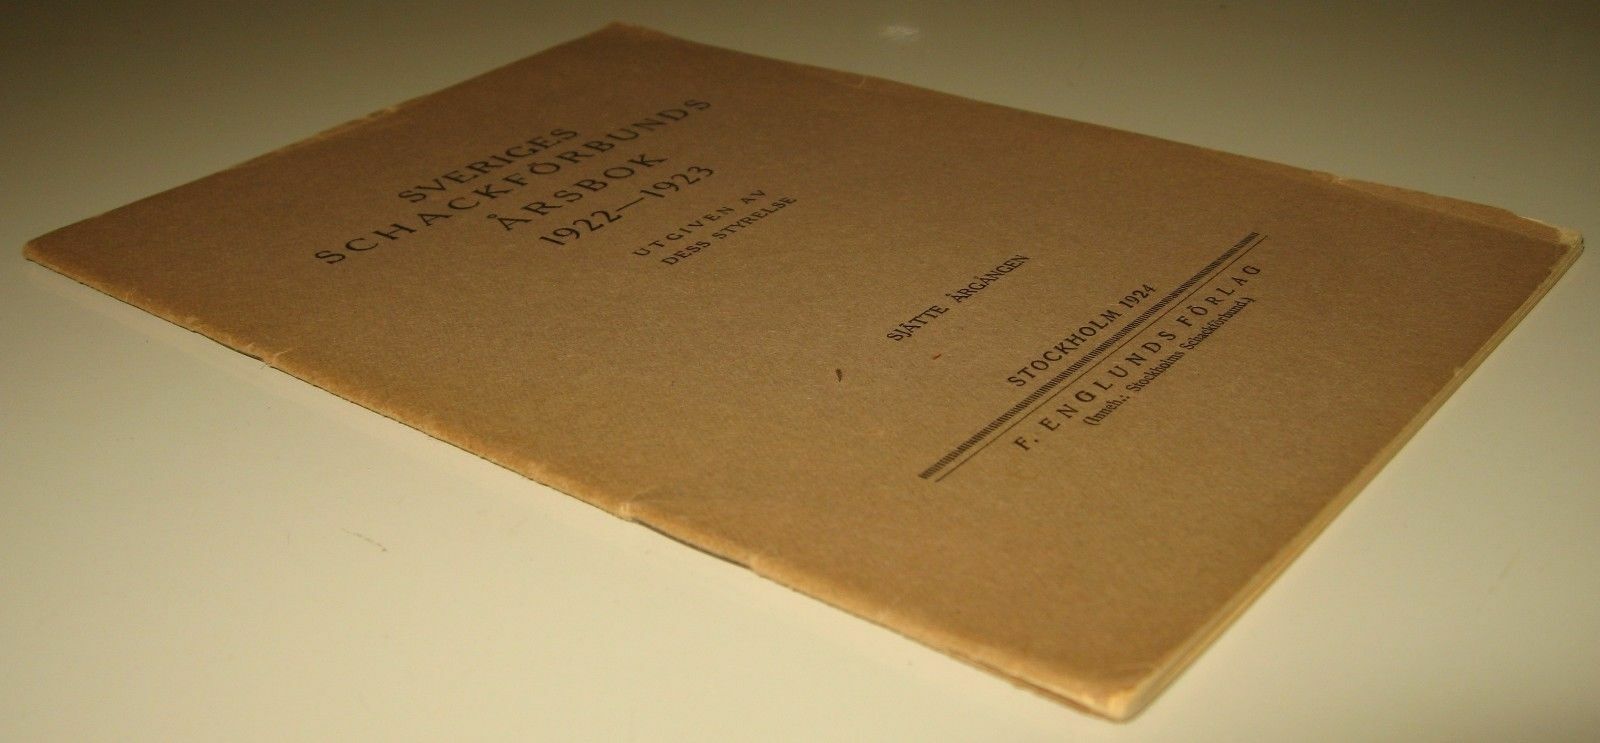 10925.Antique Swedish Chess Book: Dess Styrelse. Sveriges schachfreunds arsbok. 1924